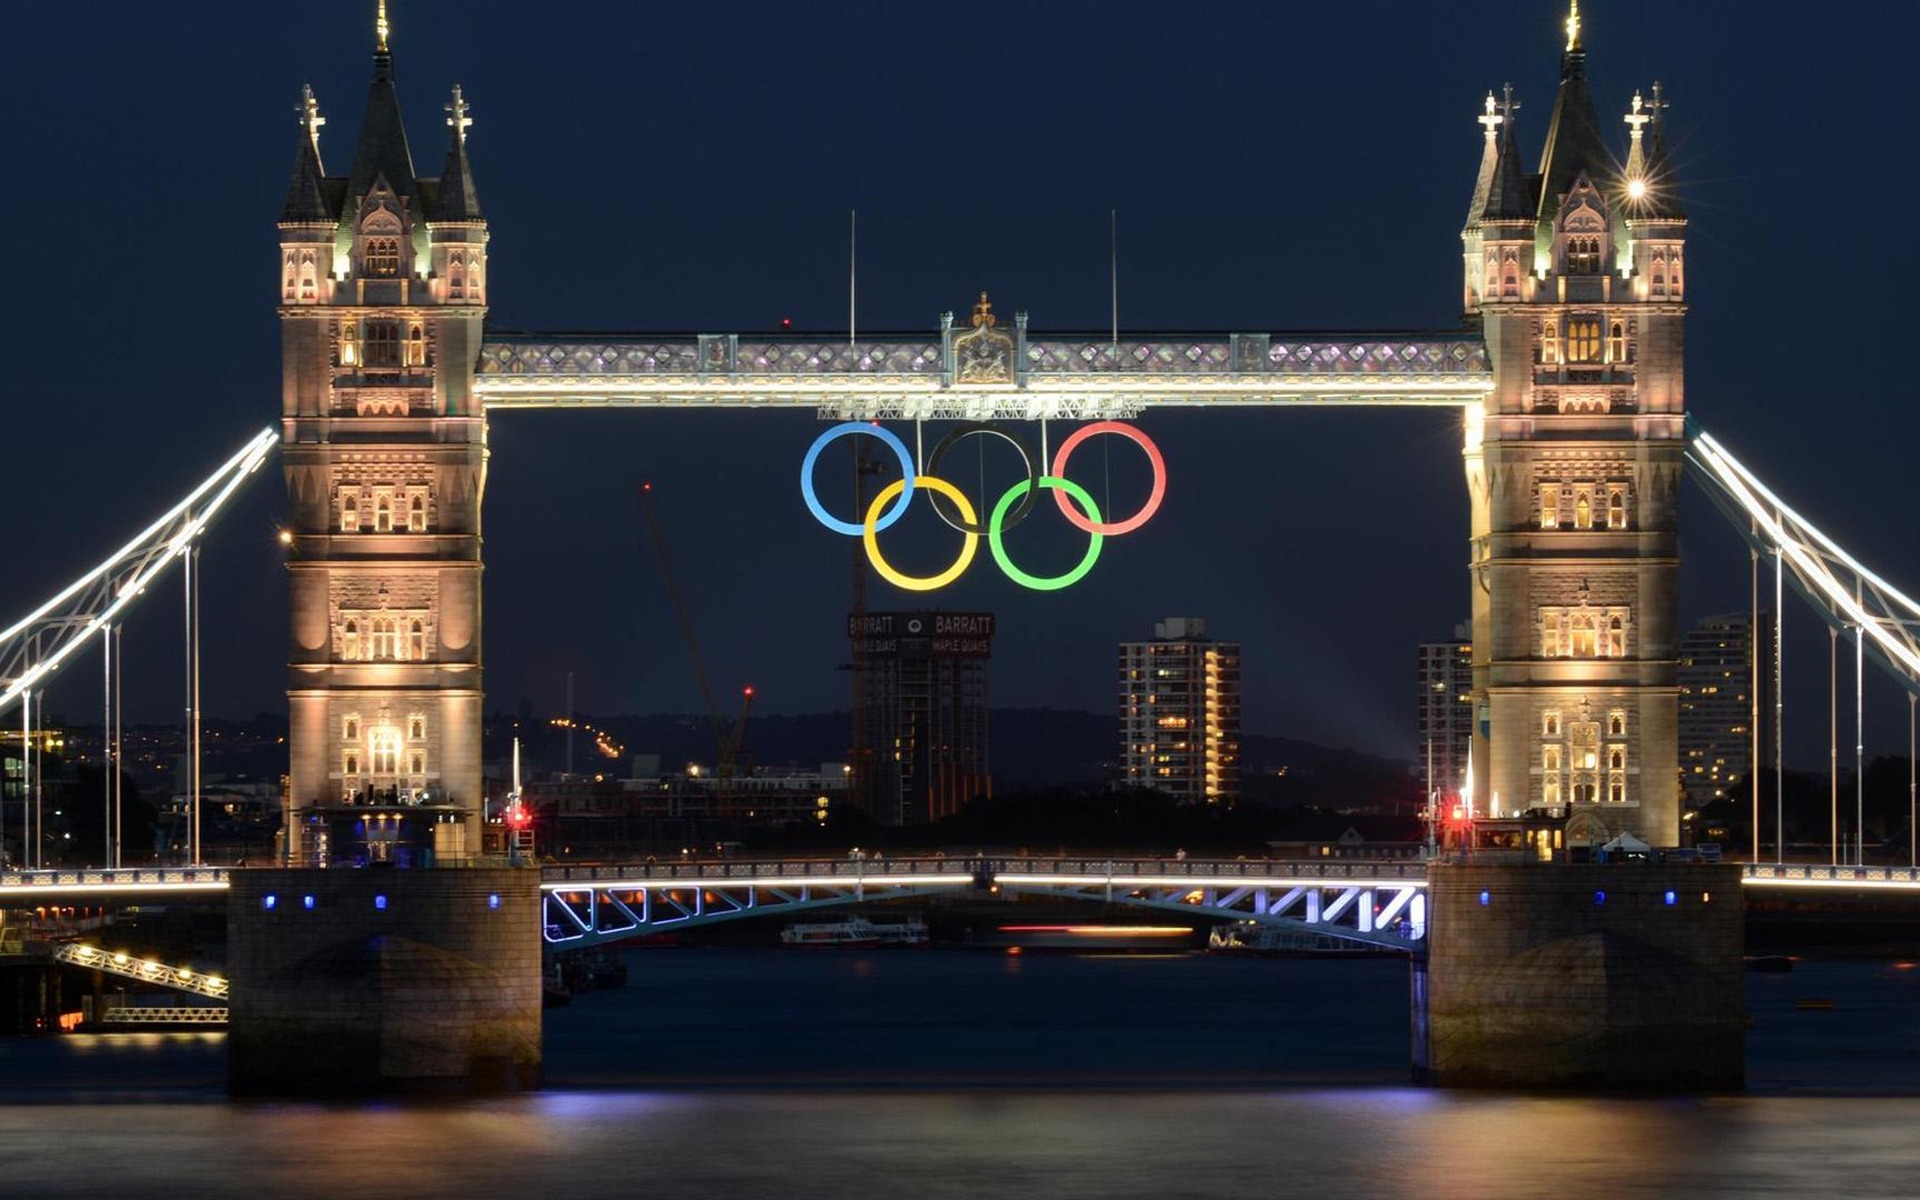 London Bridge 2012 Olympics for 1920 x 1200 widescreen resolution